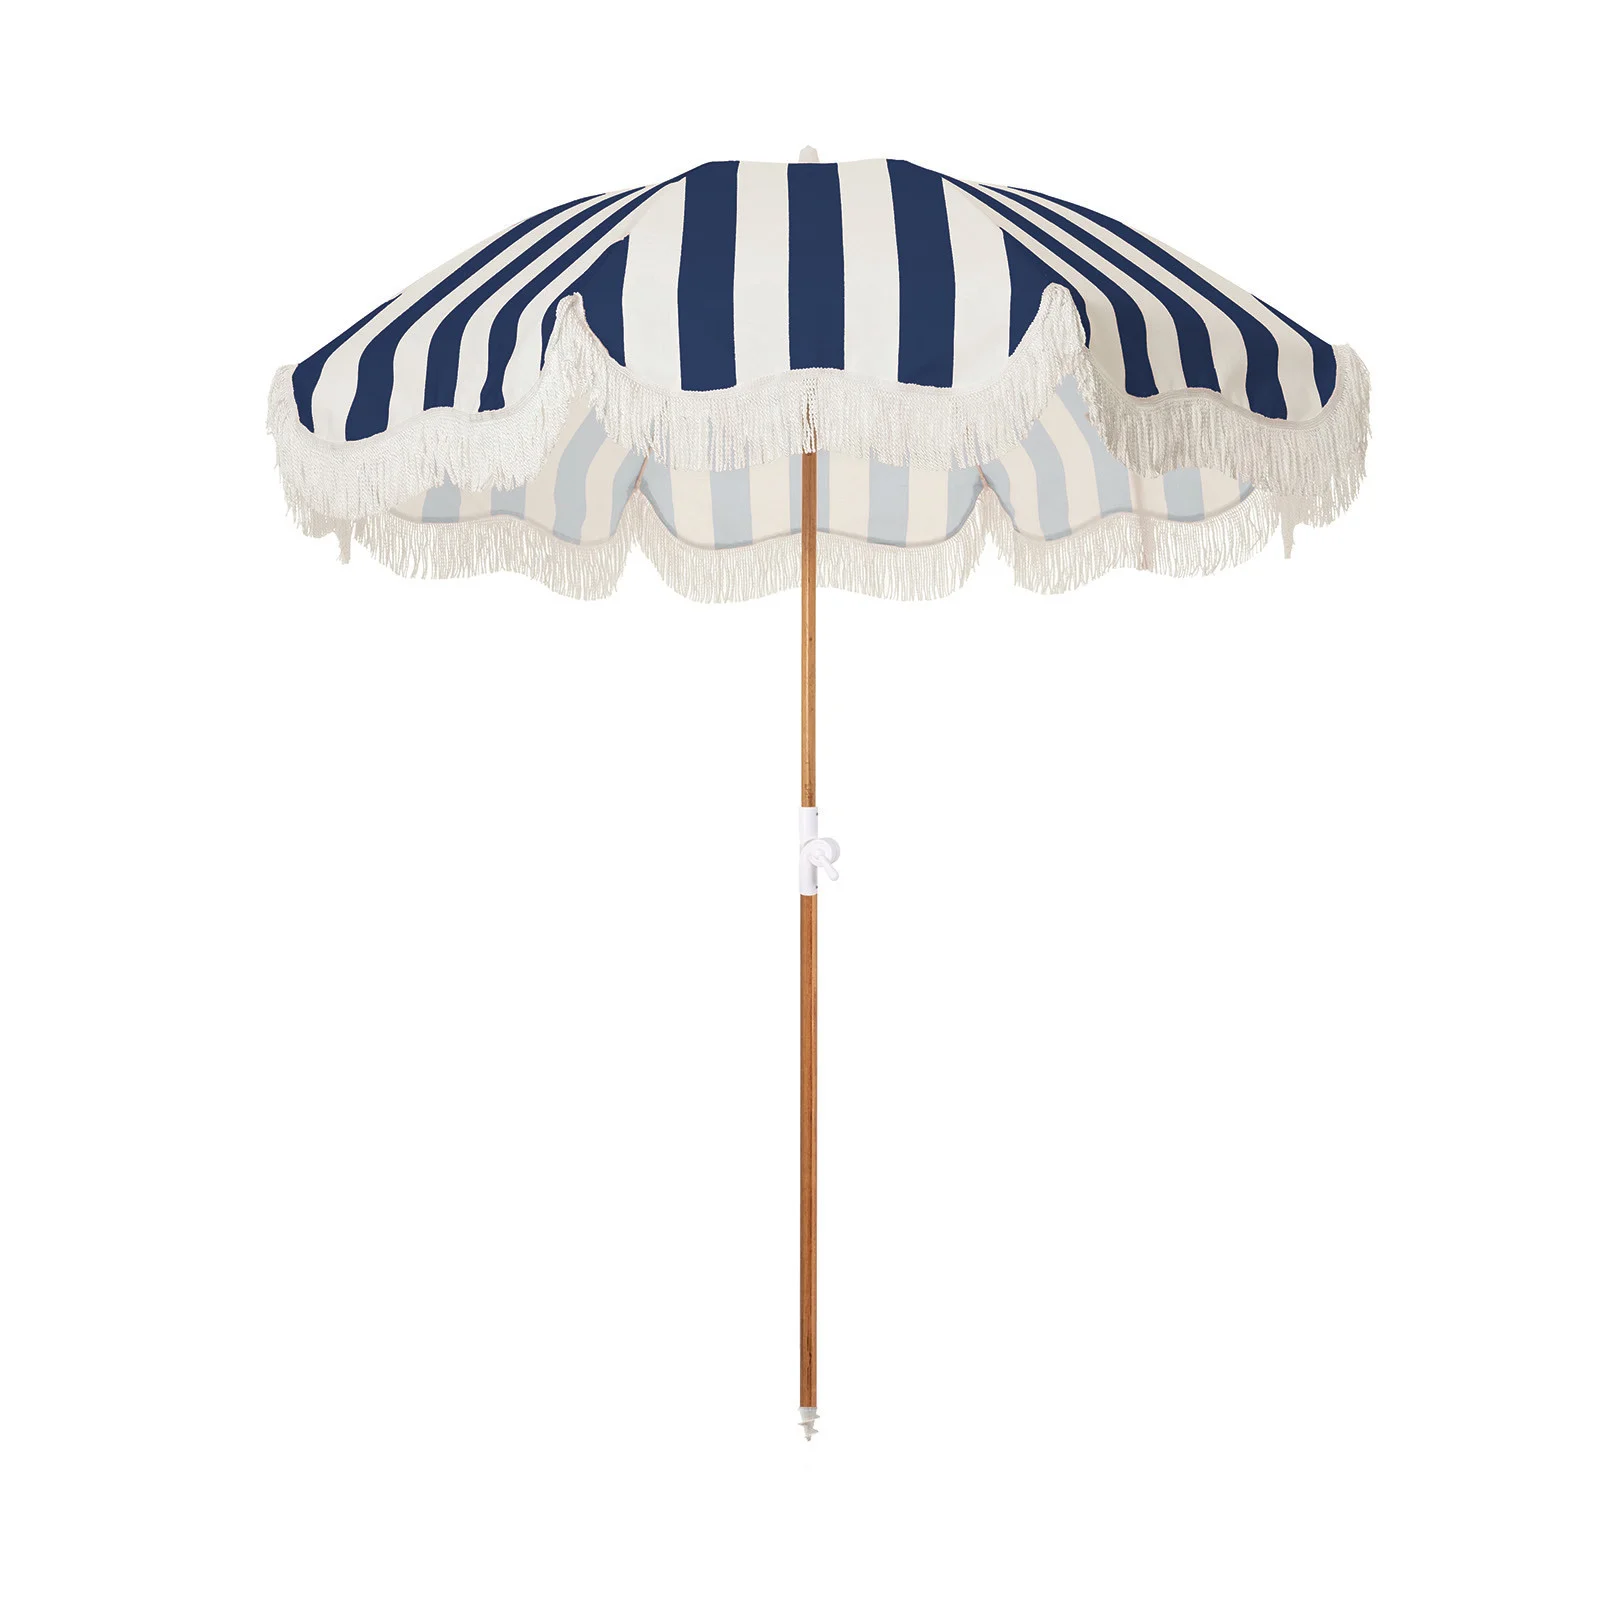 Business & Pleasure Holiday Beach Umbrella - Navy Crew Stripe Image 1